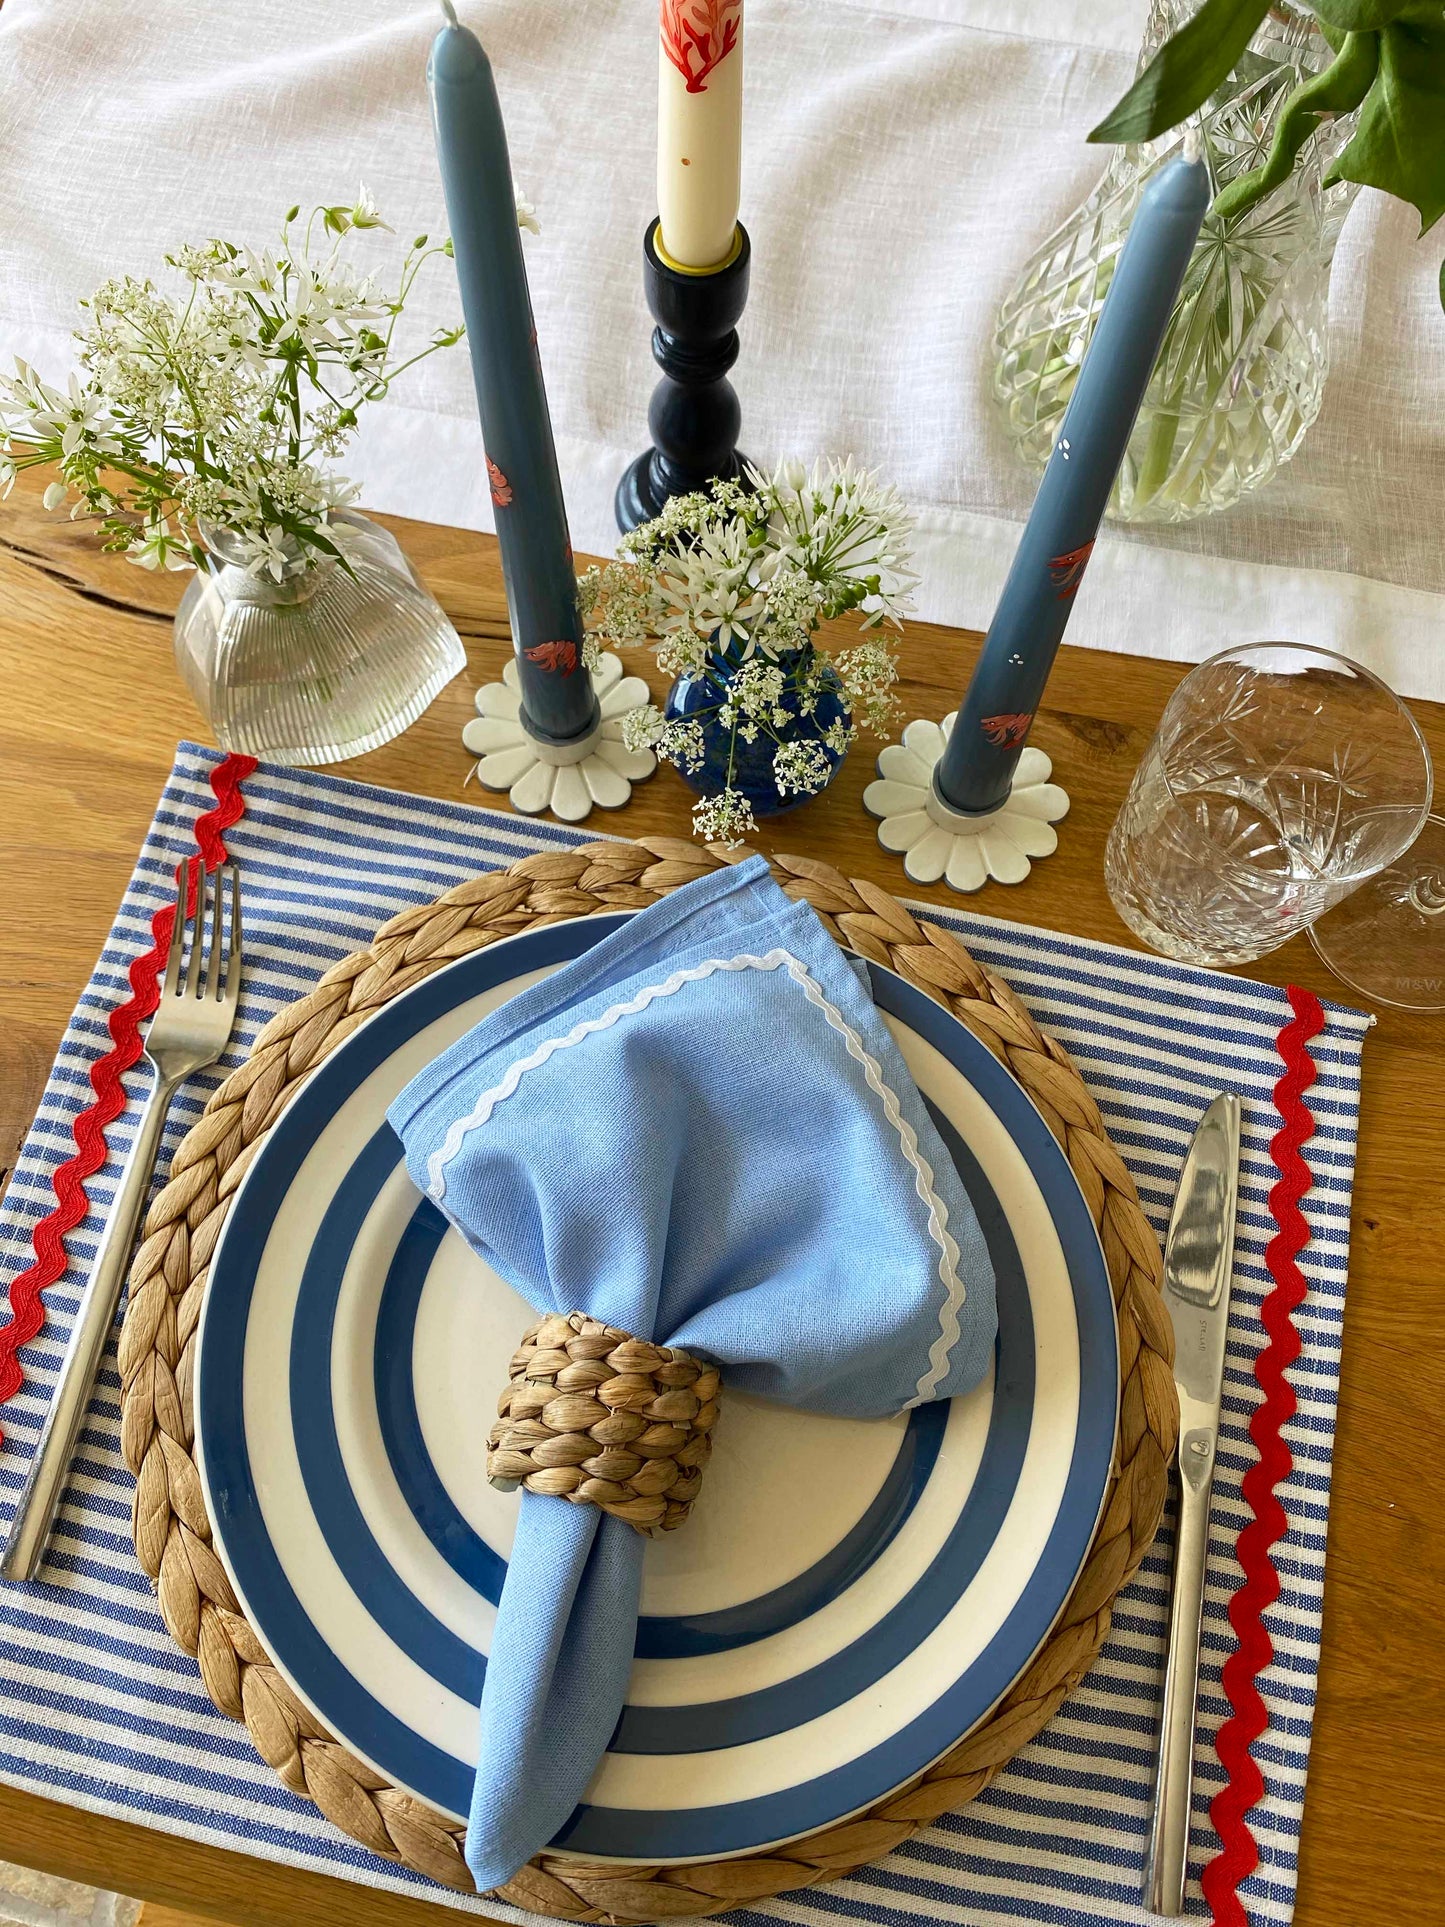 Blue & white daisy candle holder